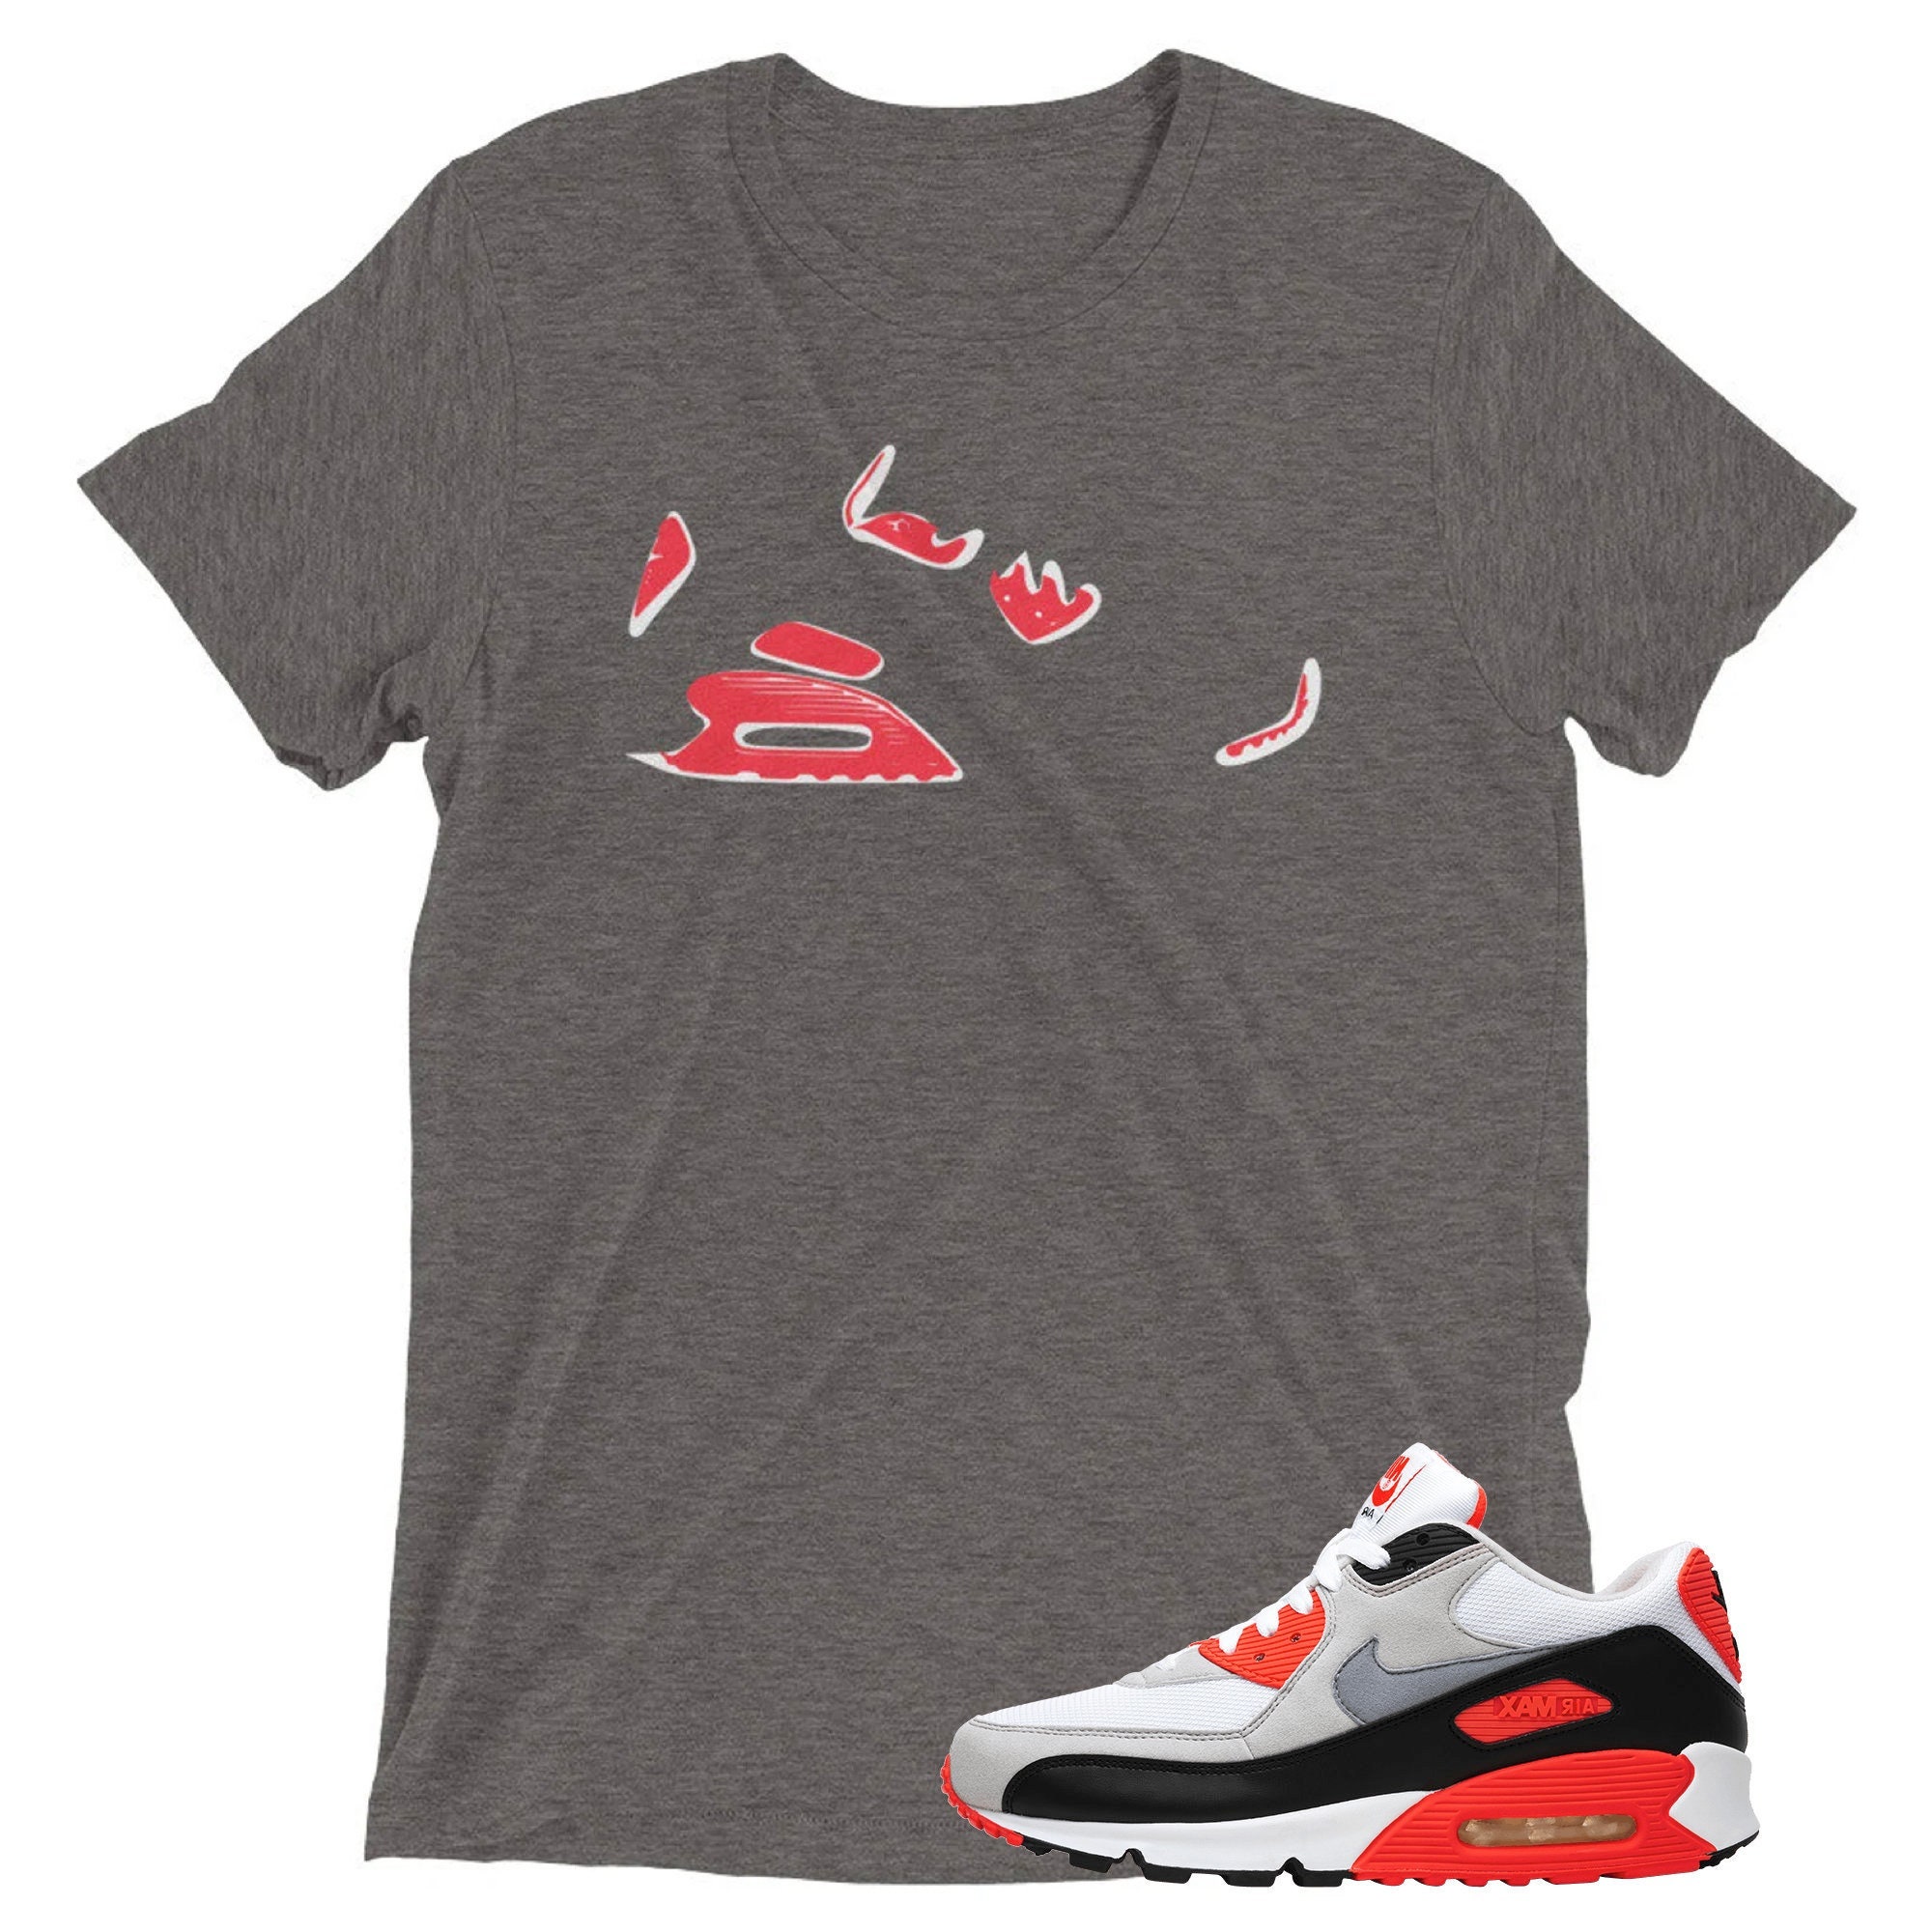 Nike Air Max T Shirt - Etsy